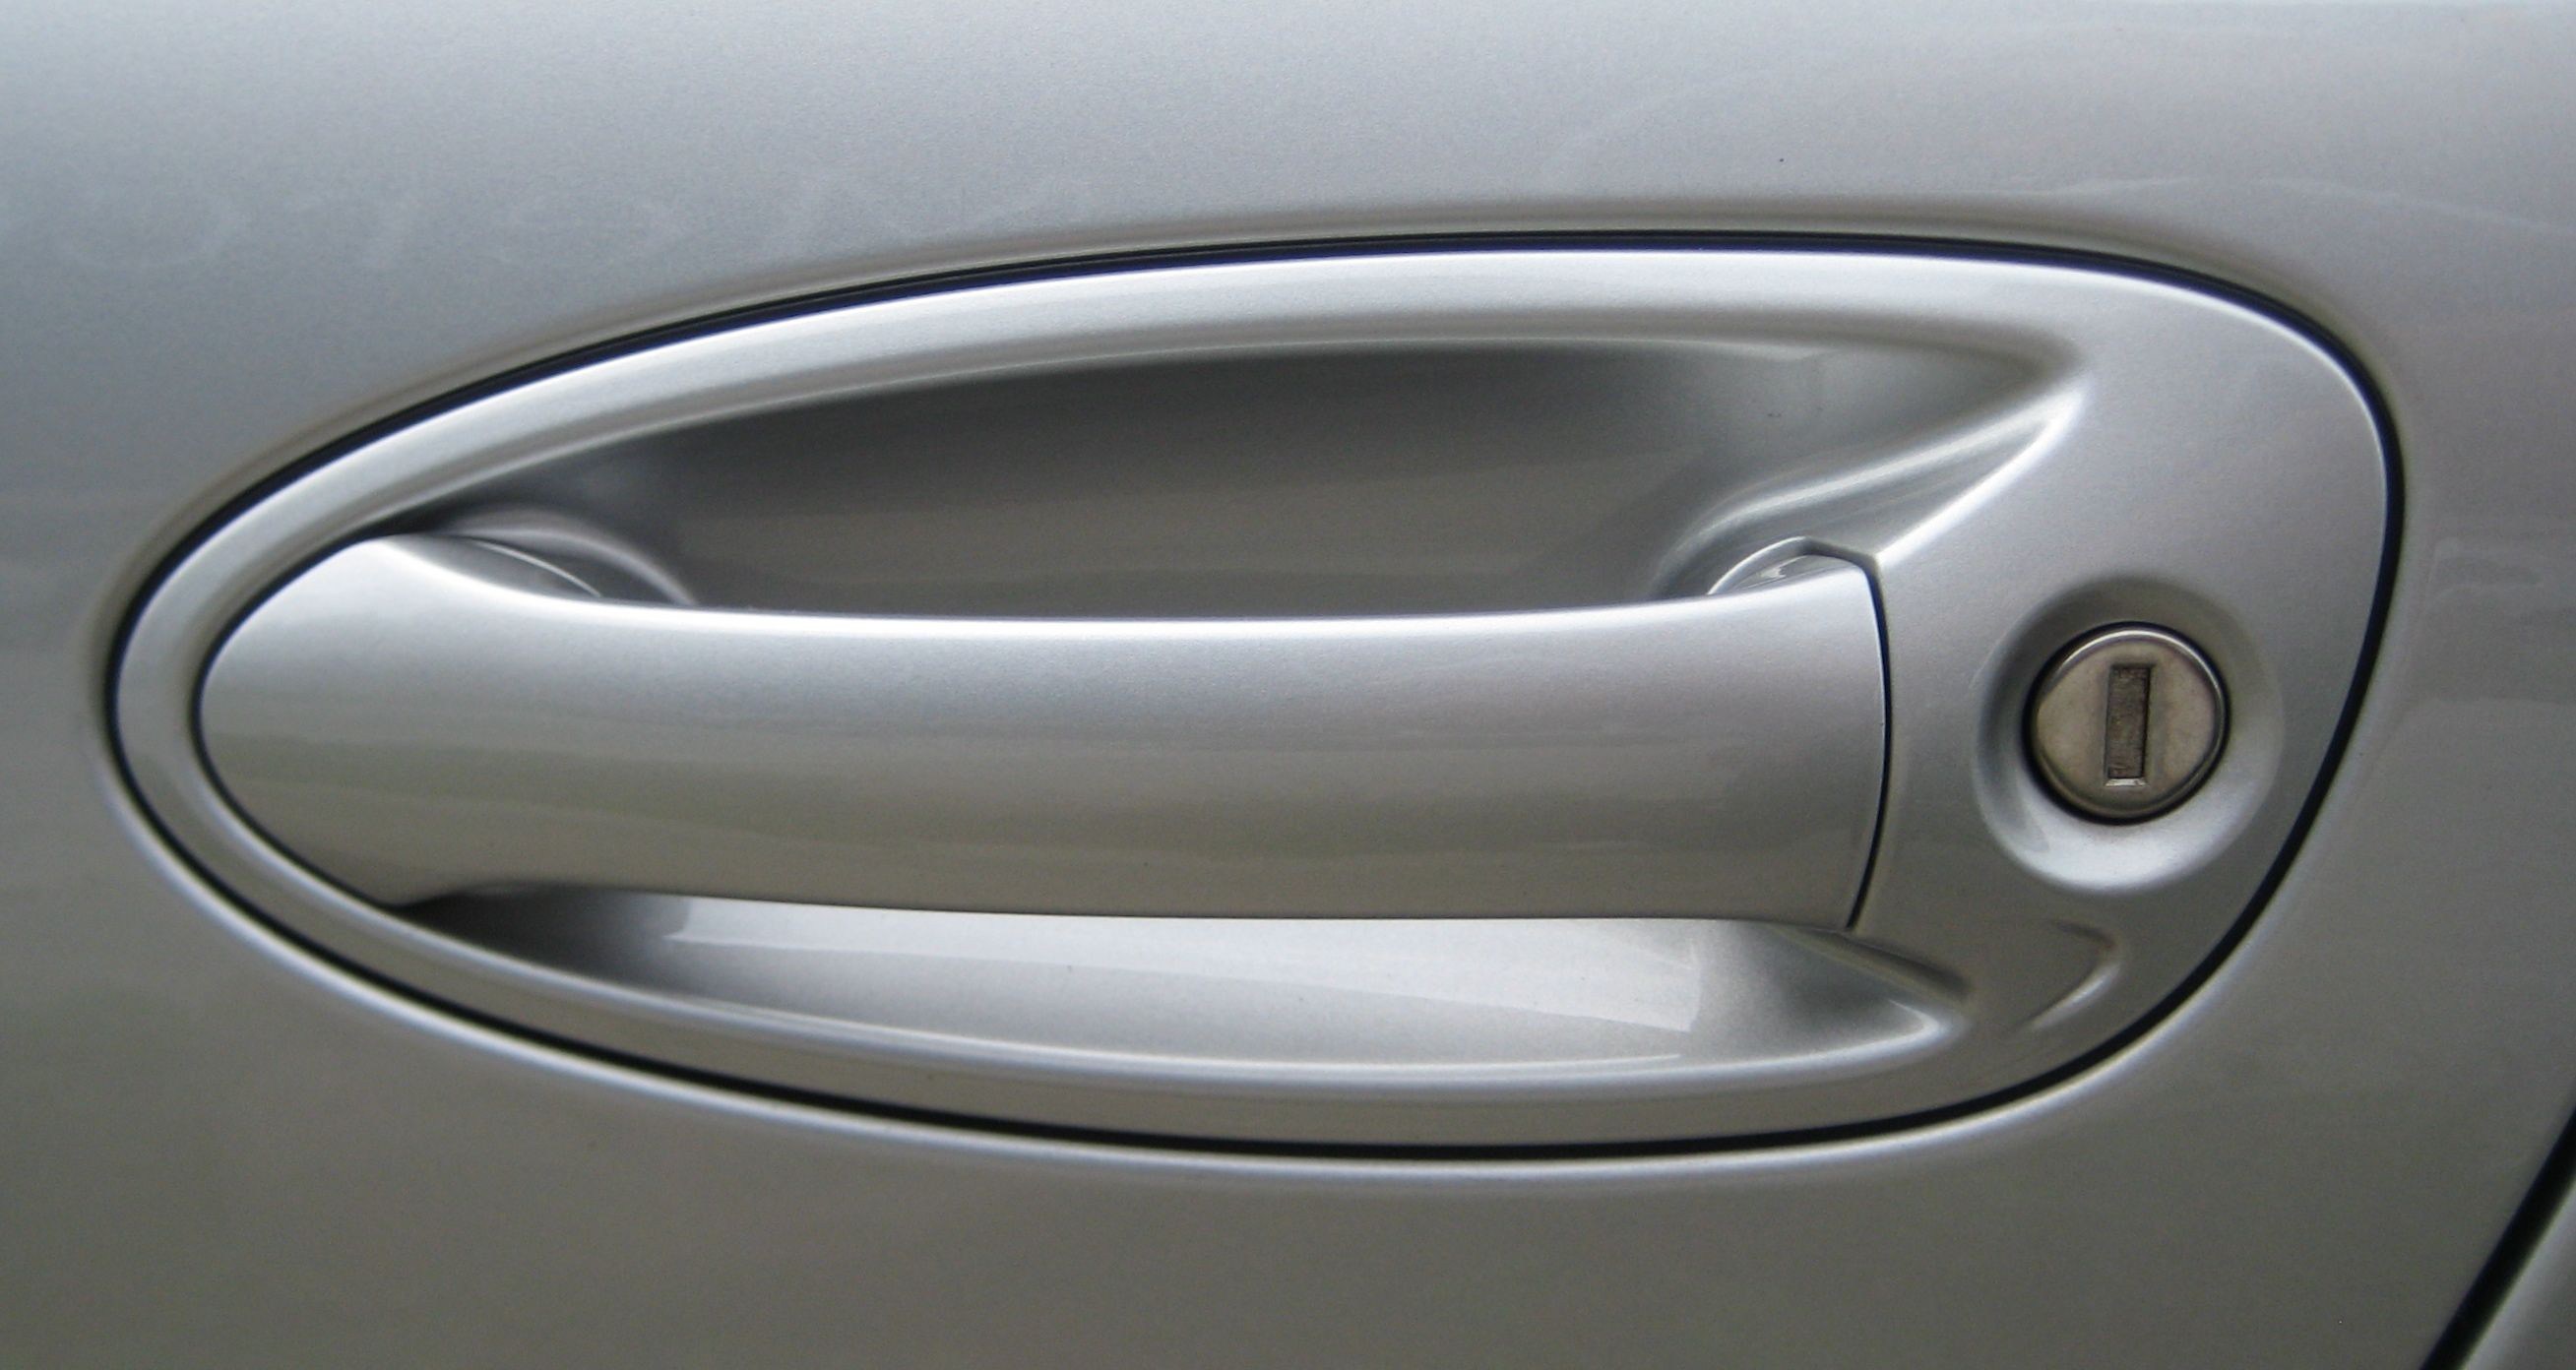 New Chrome Exterior Car Door Handles